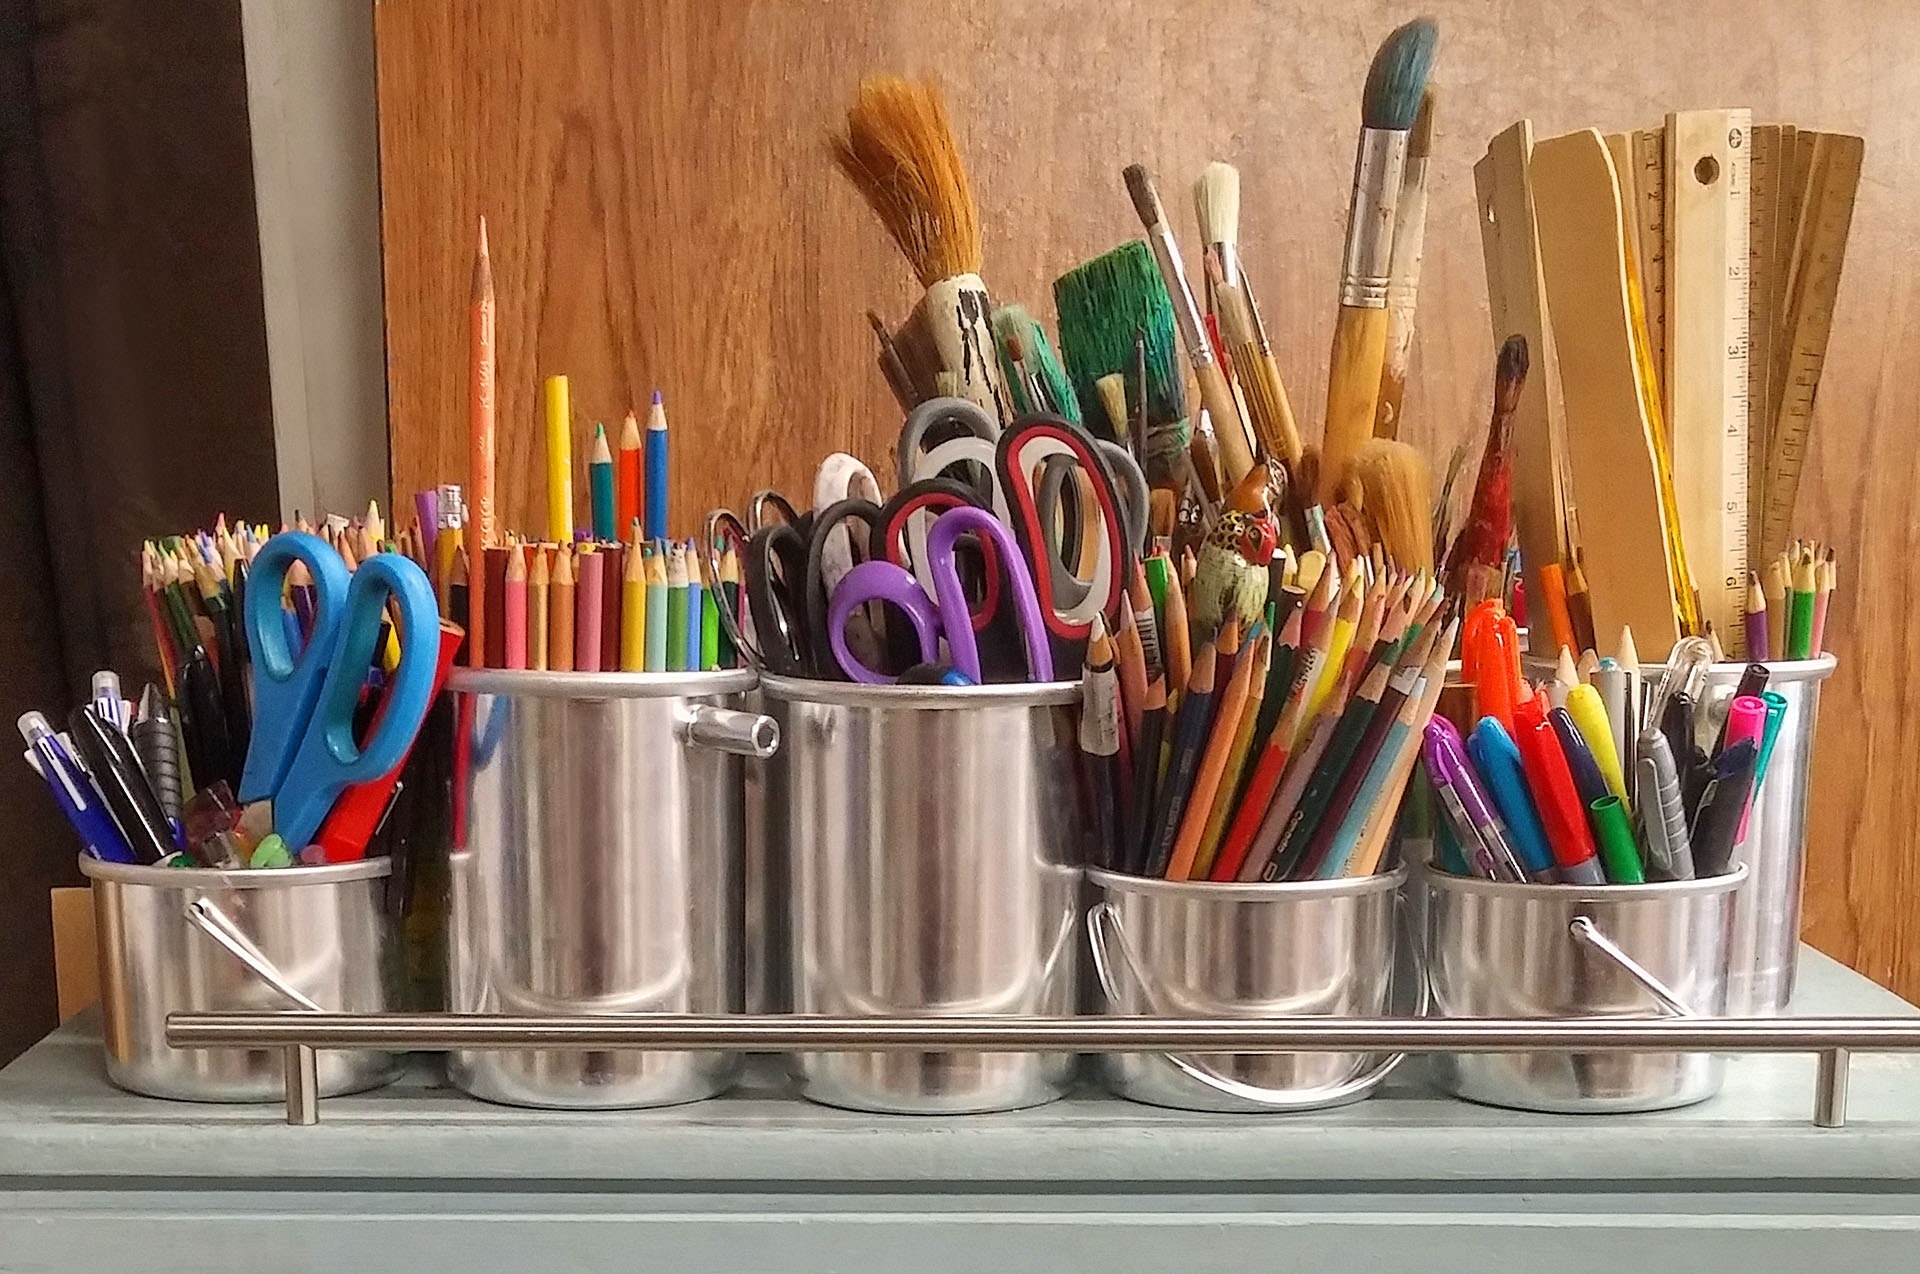 Pens and pencils in pots